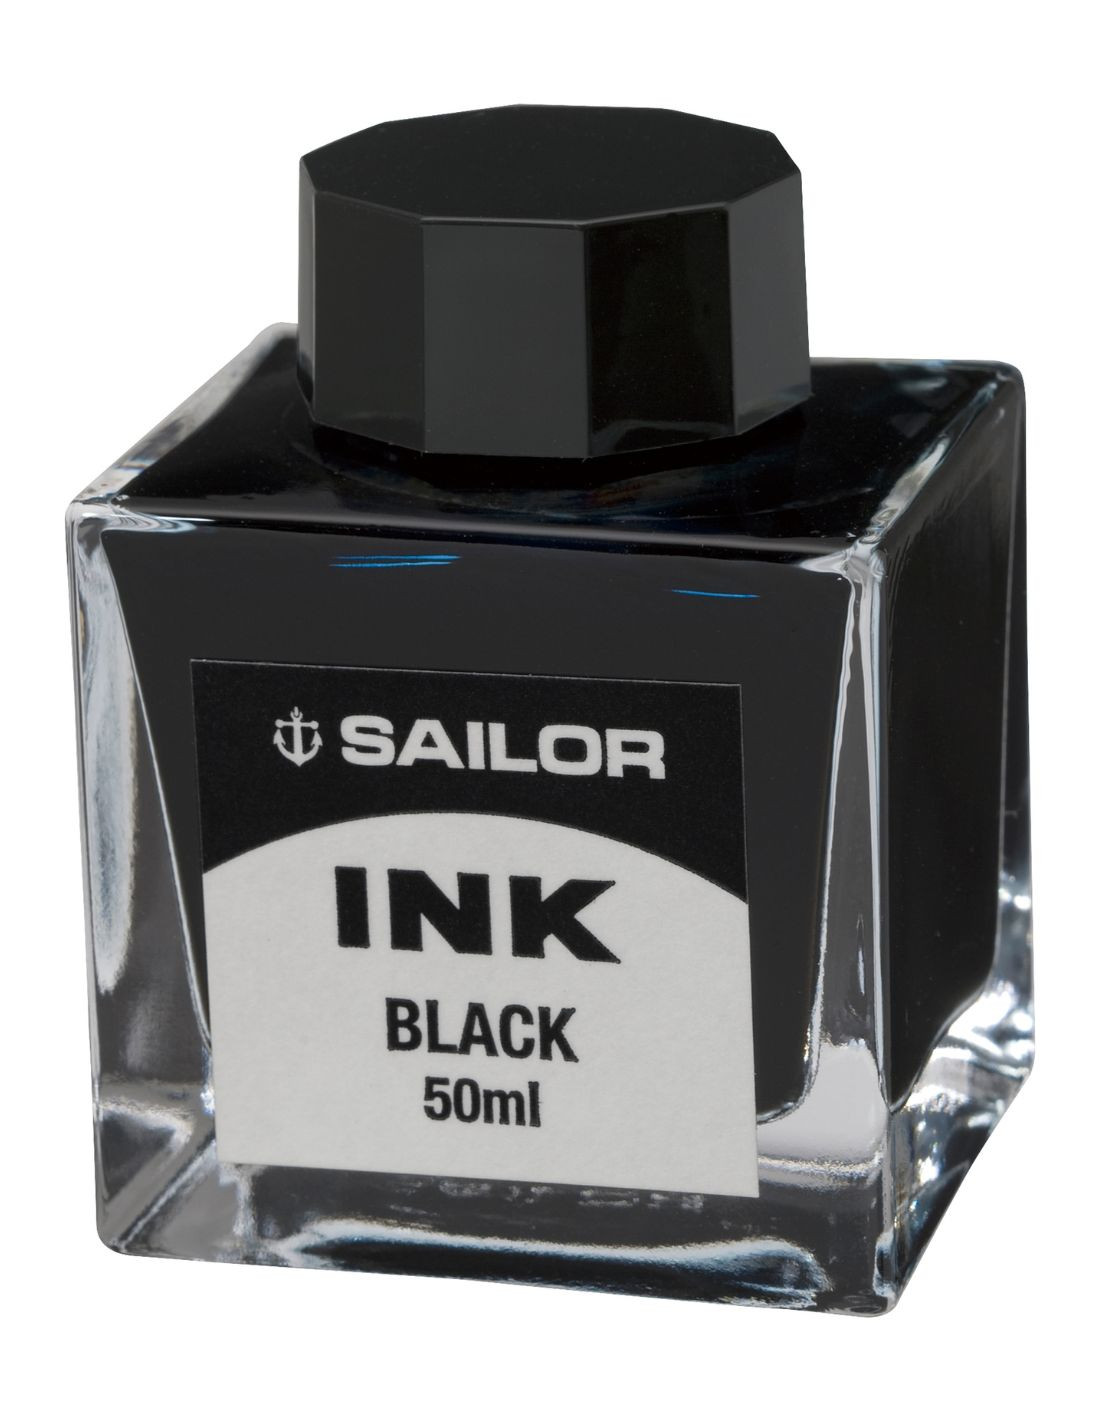 Jentle Dye based Ink - Black - 50ml bottle - Sailor